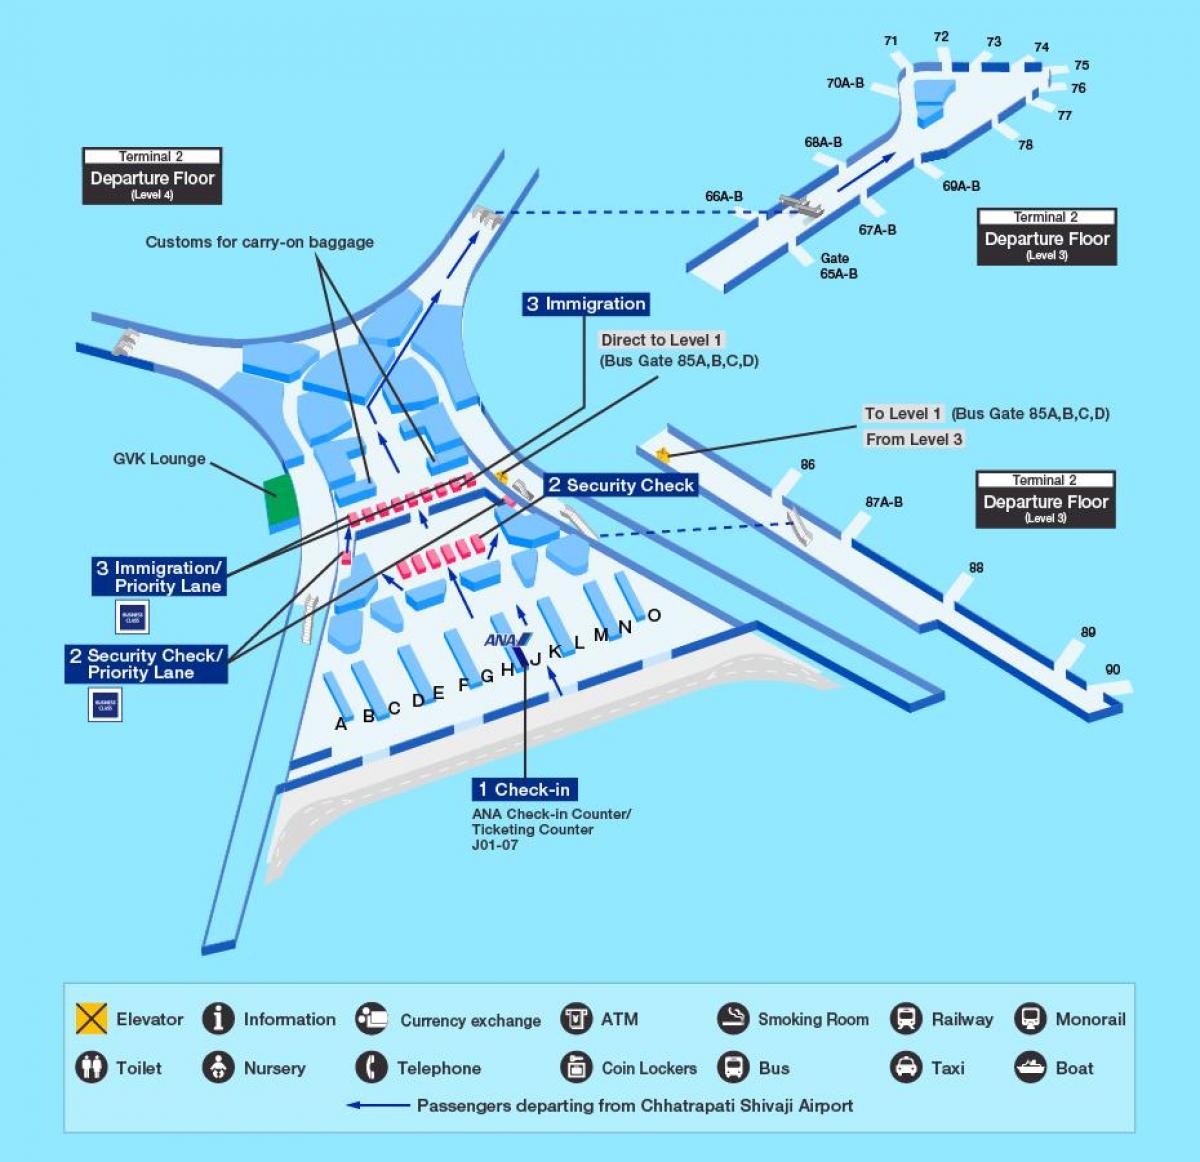 L'aéroport international Chhatrapati Shivaji de la carte